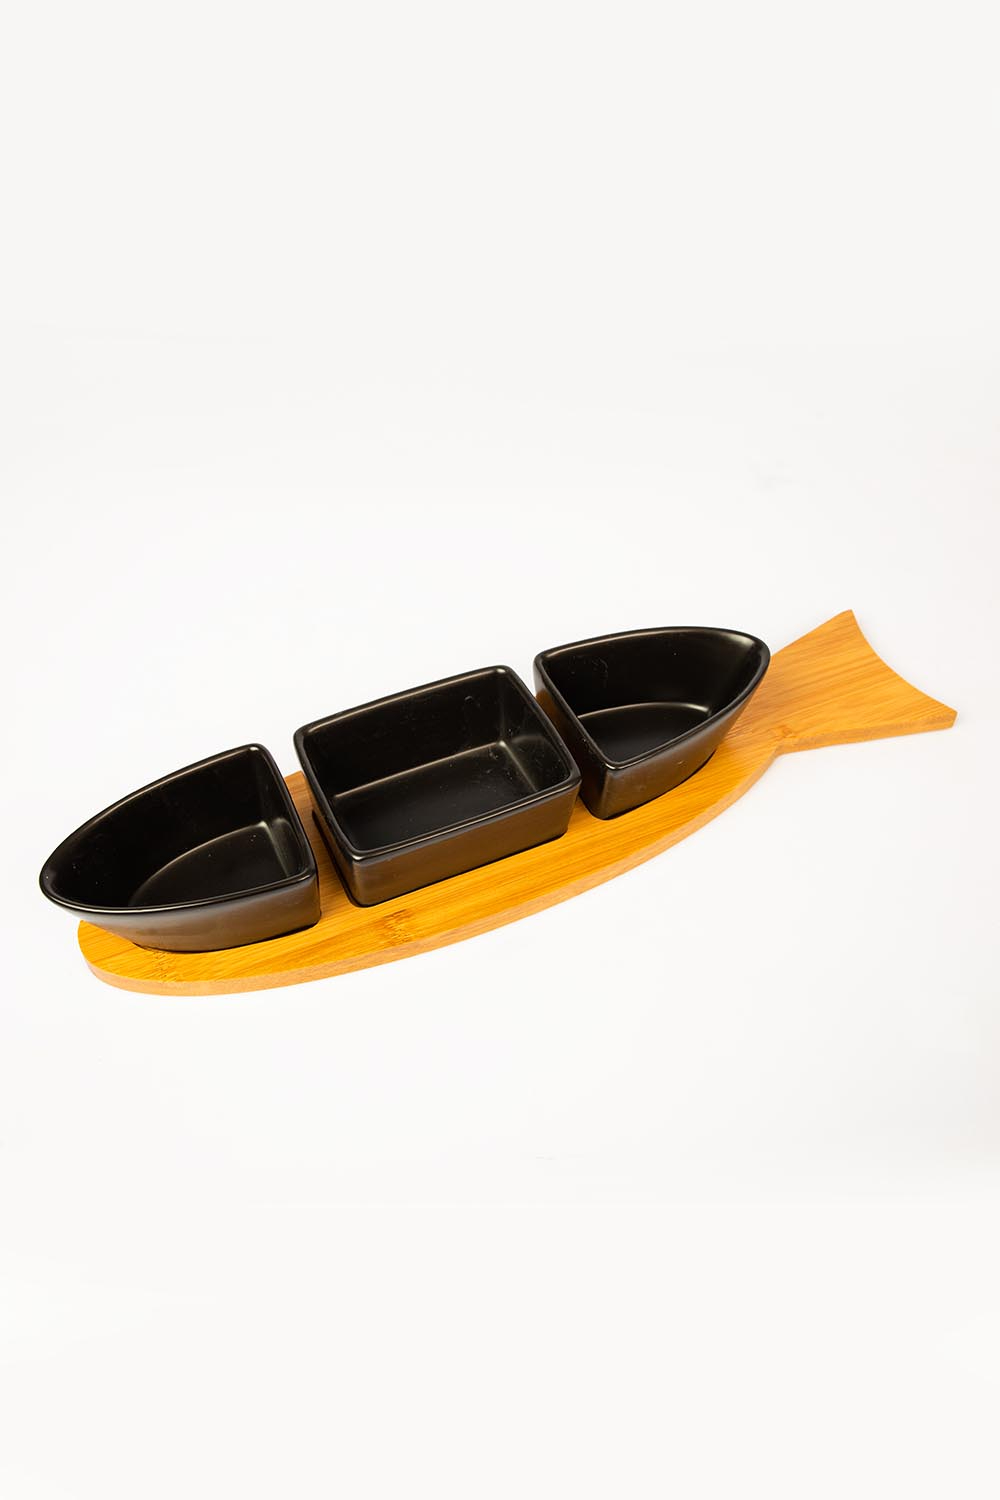 Odel Black Ceramic Serving Bowls 3pcs set On Wood Fish Tray